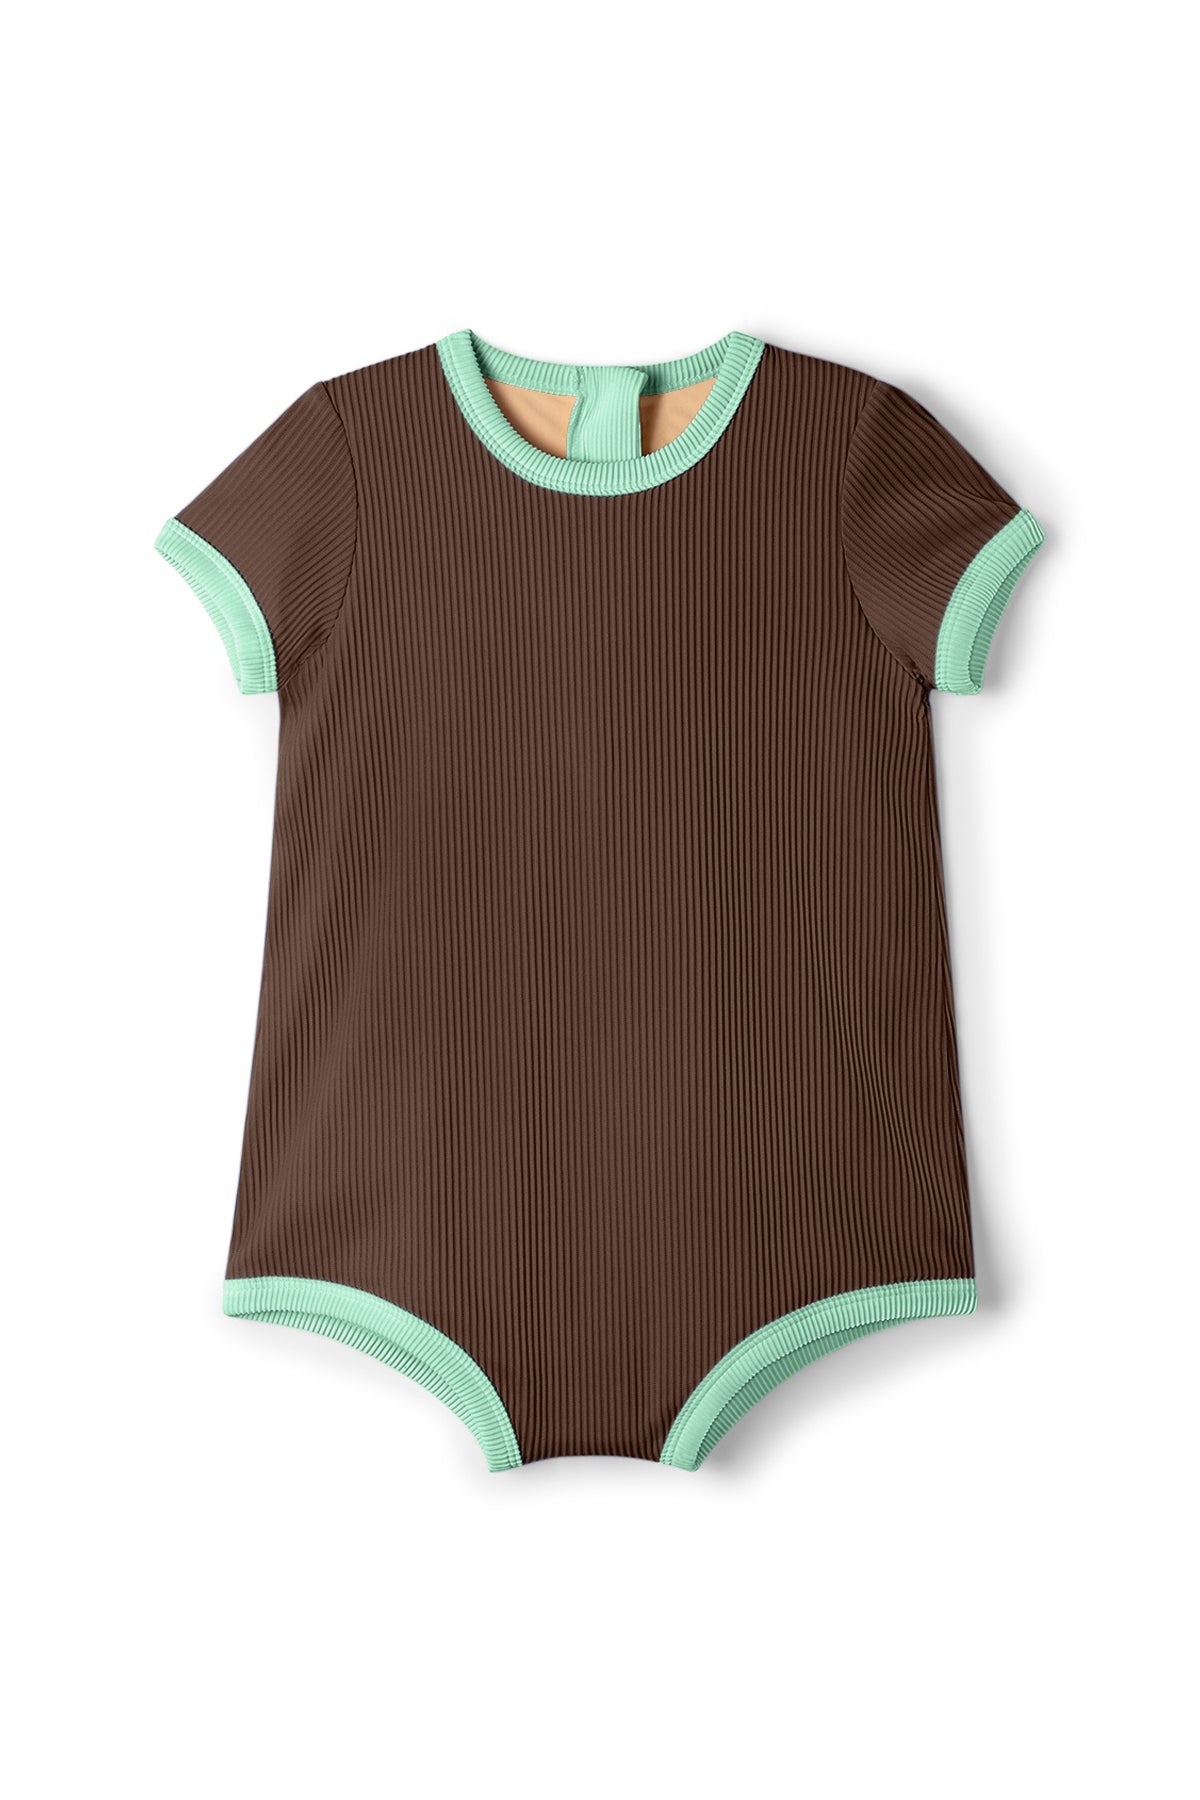 zulu & zephyr mini infant onesie - cacoa brown